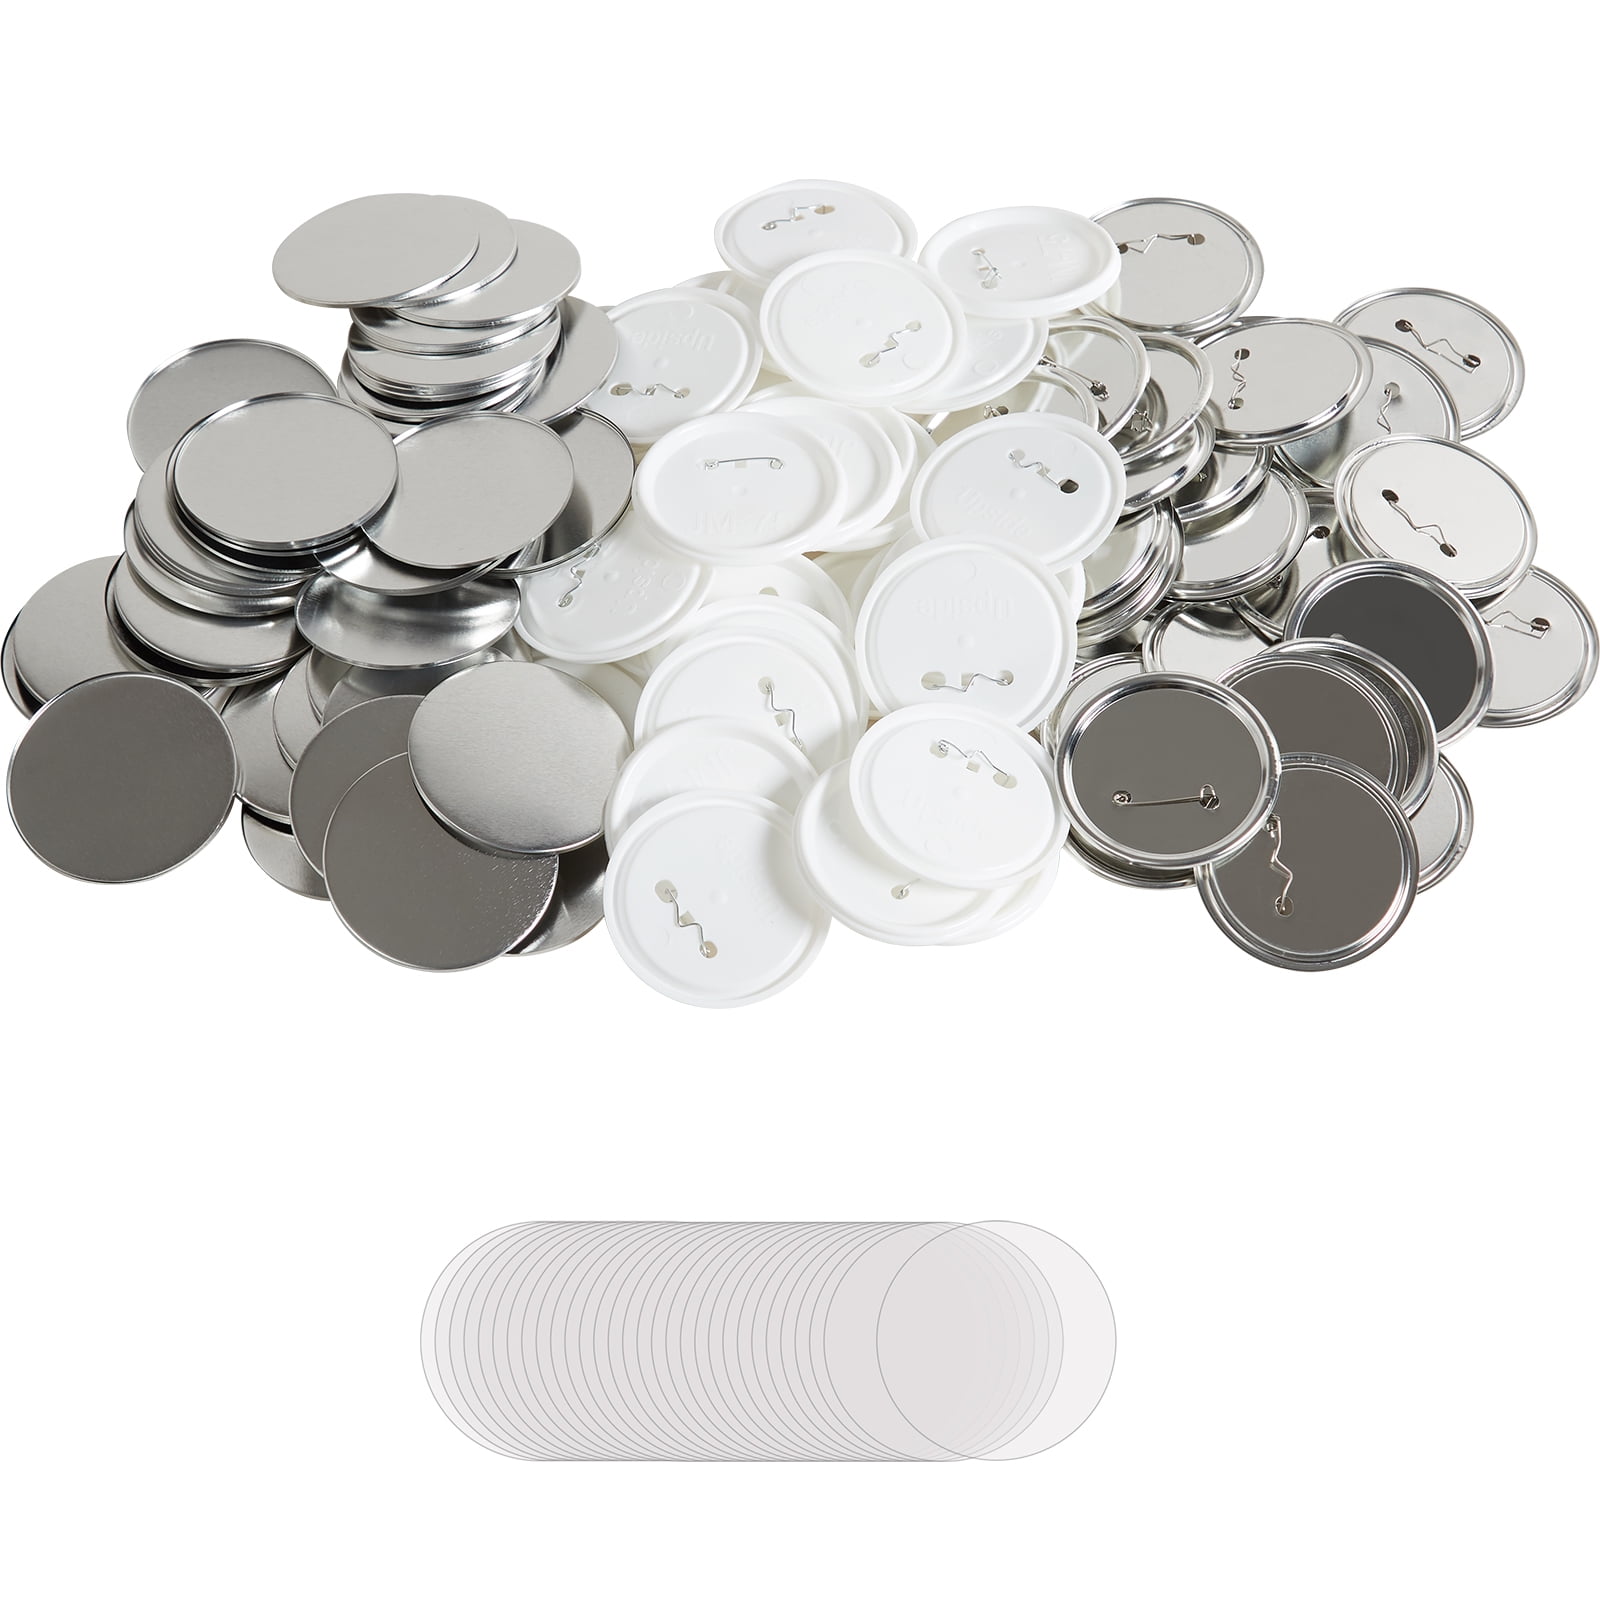 IRONWALLS 75mm Button Supplies, 100 Sets of 3 Inch Button Making Supplies  Metal Button Parts for Button Maker Machine, Round Badge Blank Button Pins